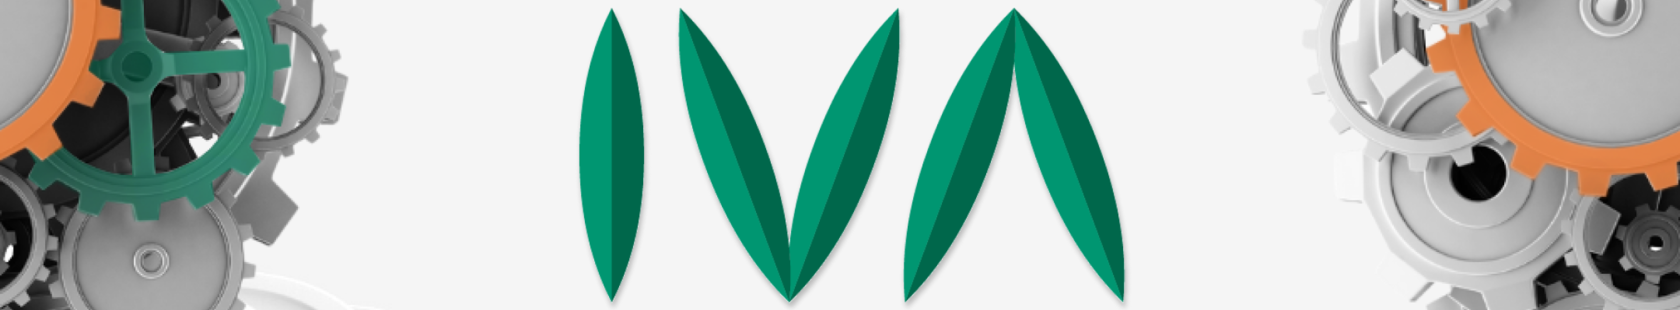 Iva s. IVA Technologies лого. IVA Technologies. IVA connect заставка.